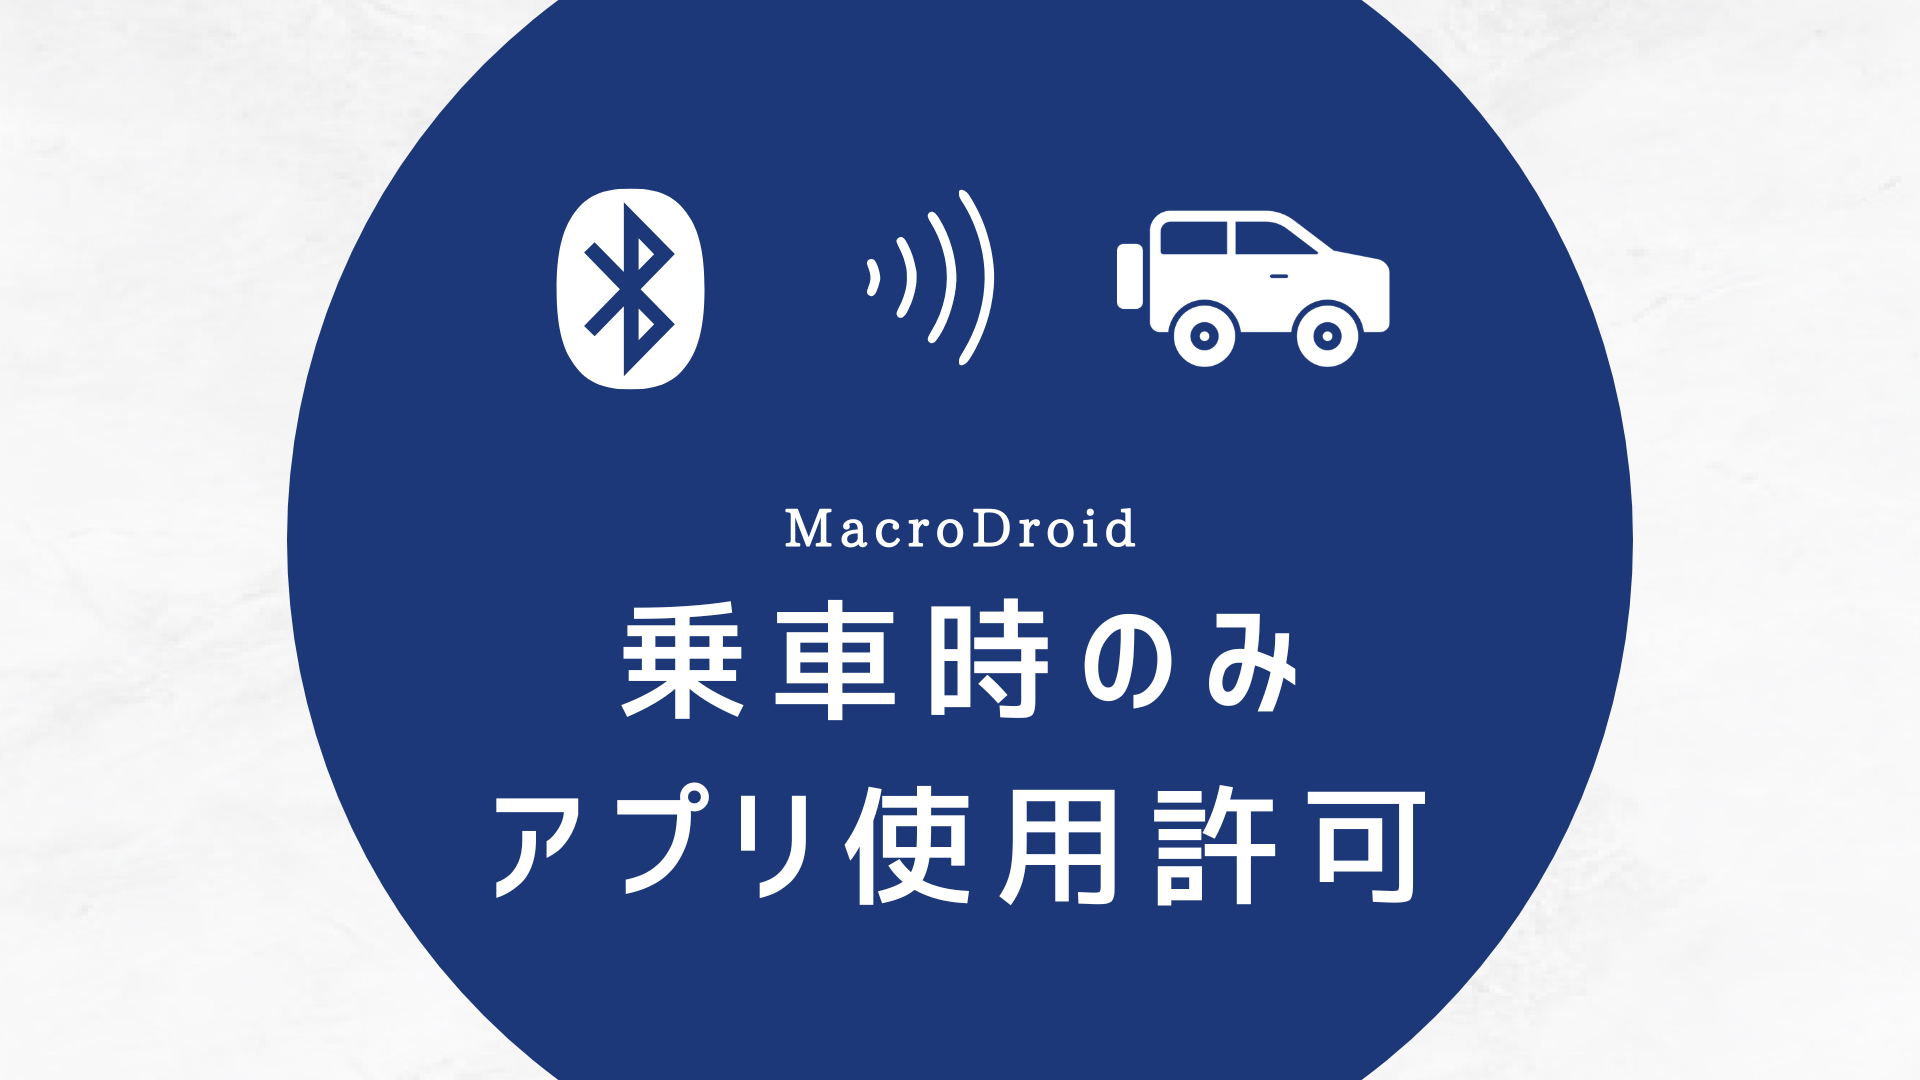 MacroDroid-乗車時アプリ使用制限解除マクロ-アイキャッチ